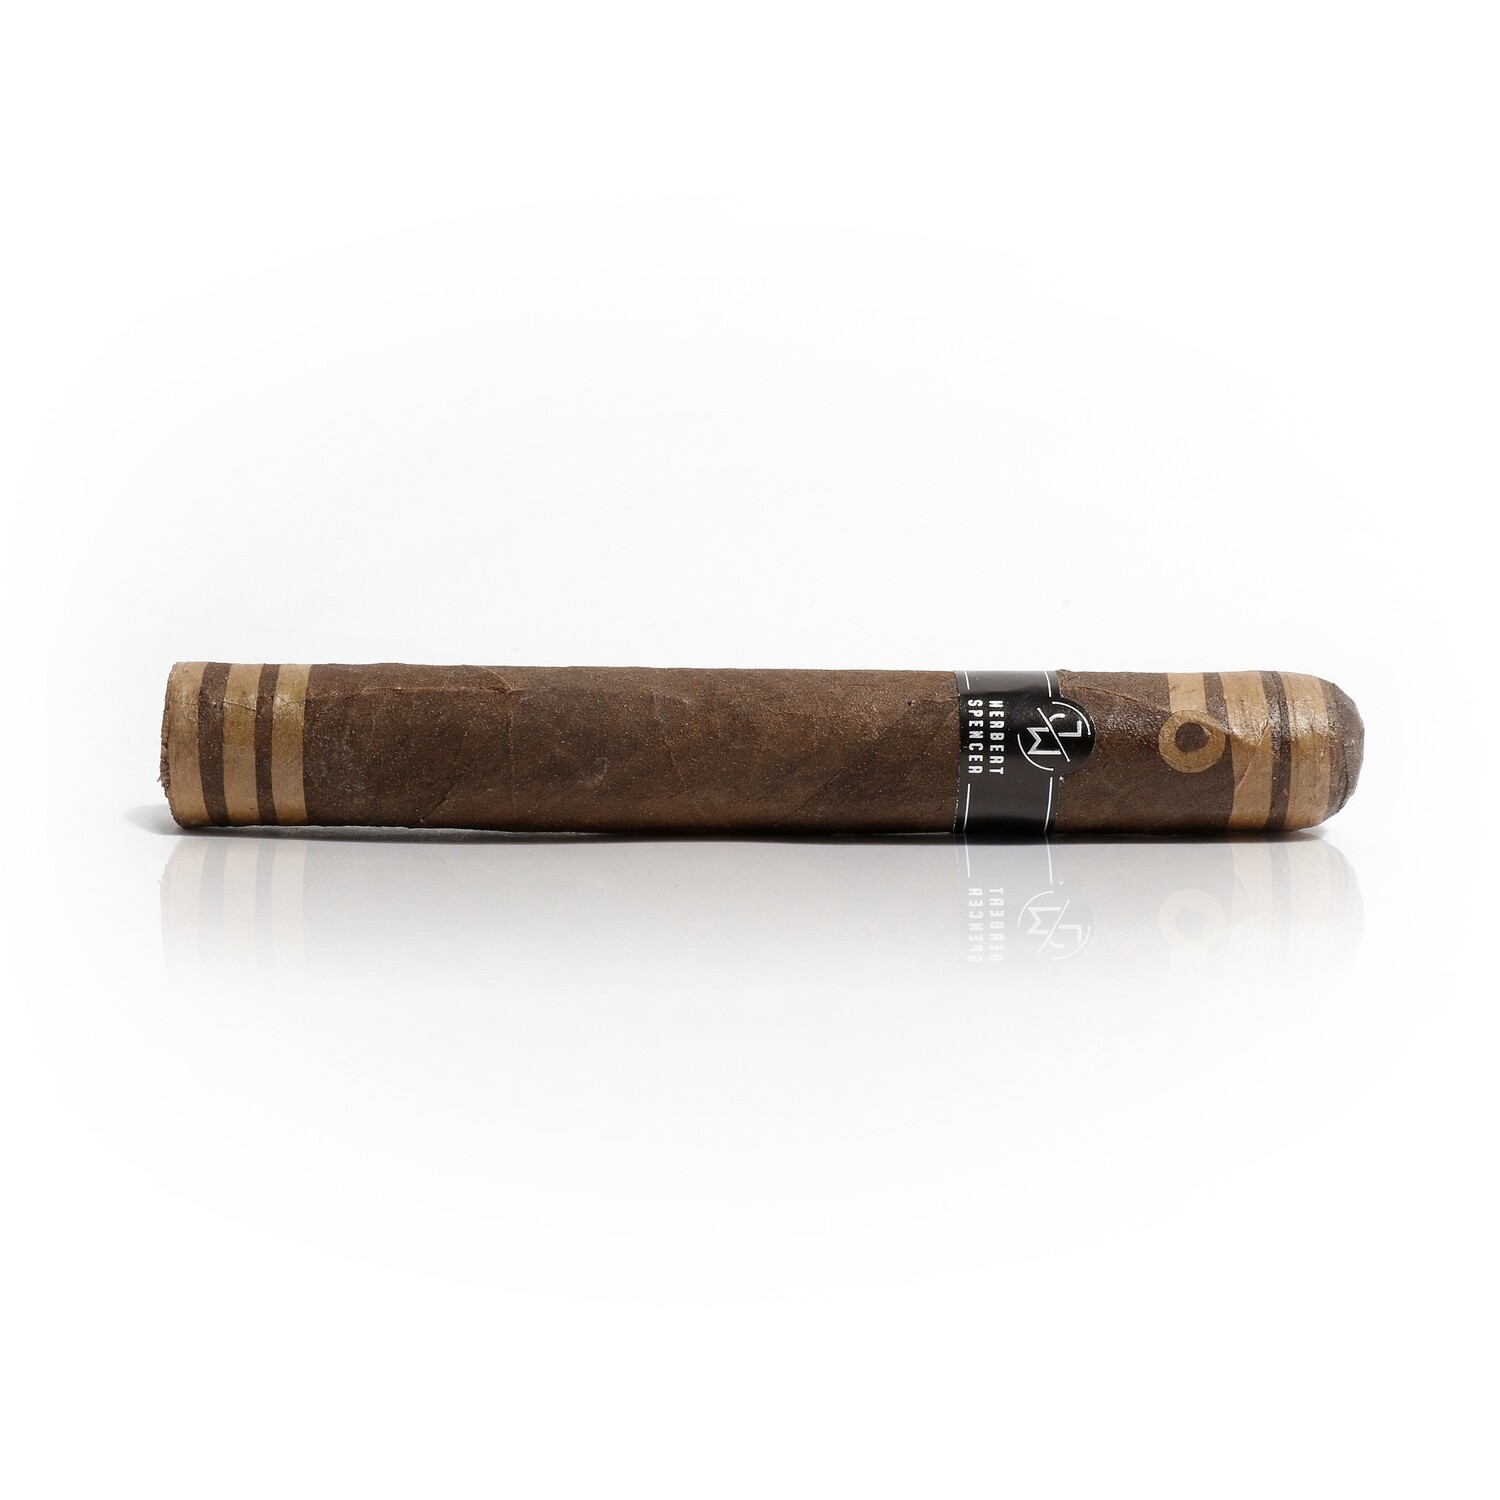 Jake Wyatt Herbert Spencer robusto 5 x 50 Single Cigar